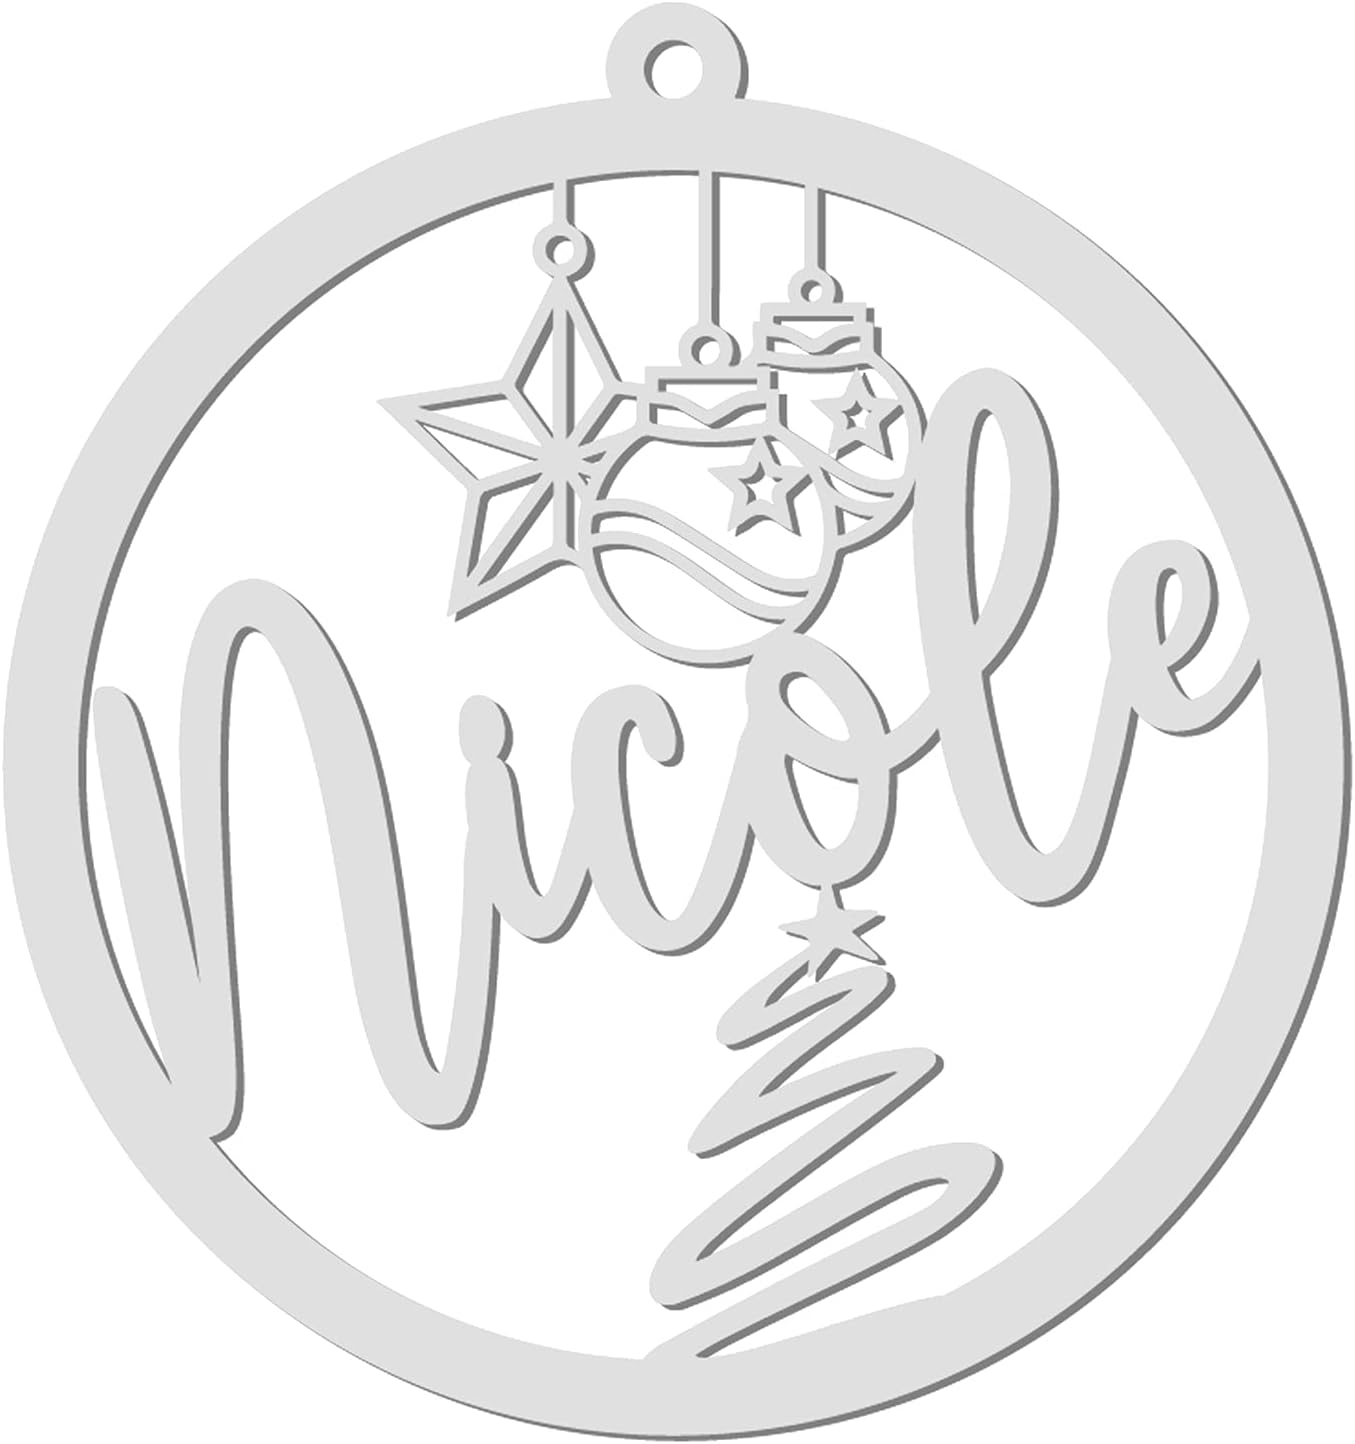 Metallic Circle Christmas Decoration With Name